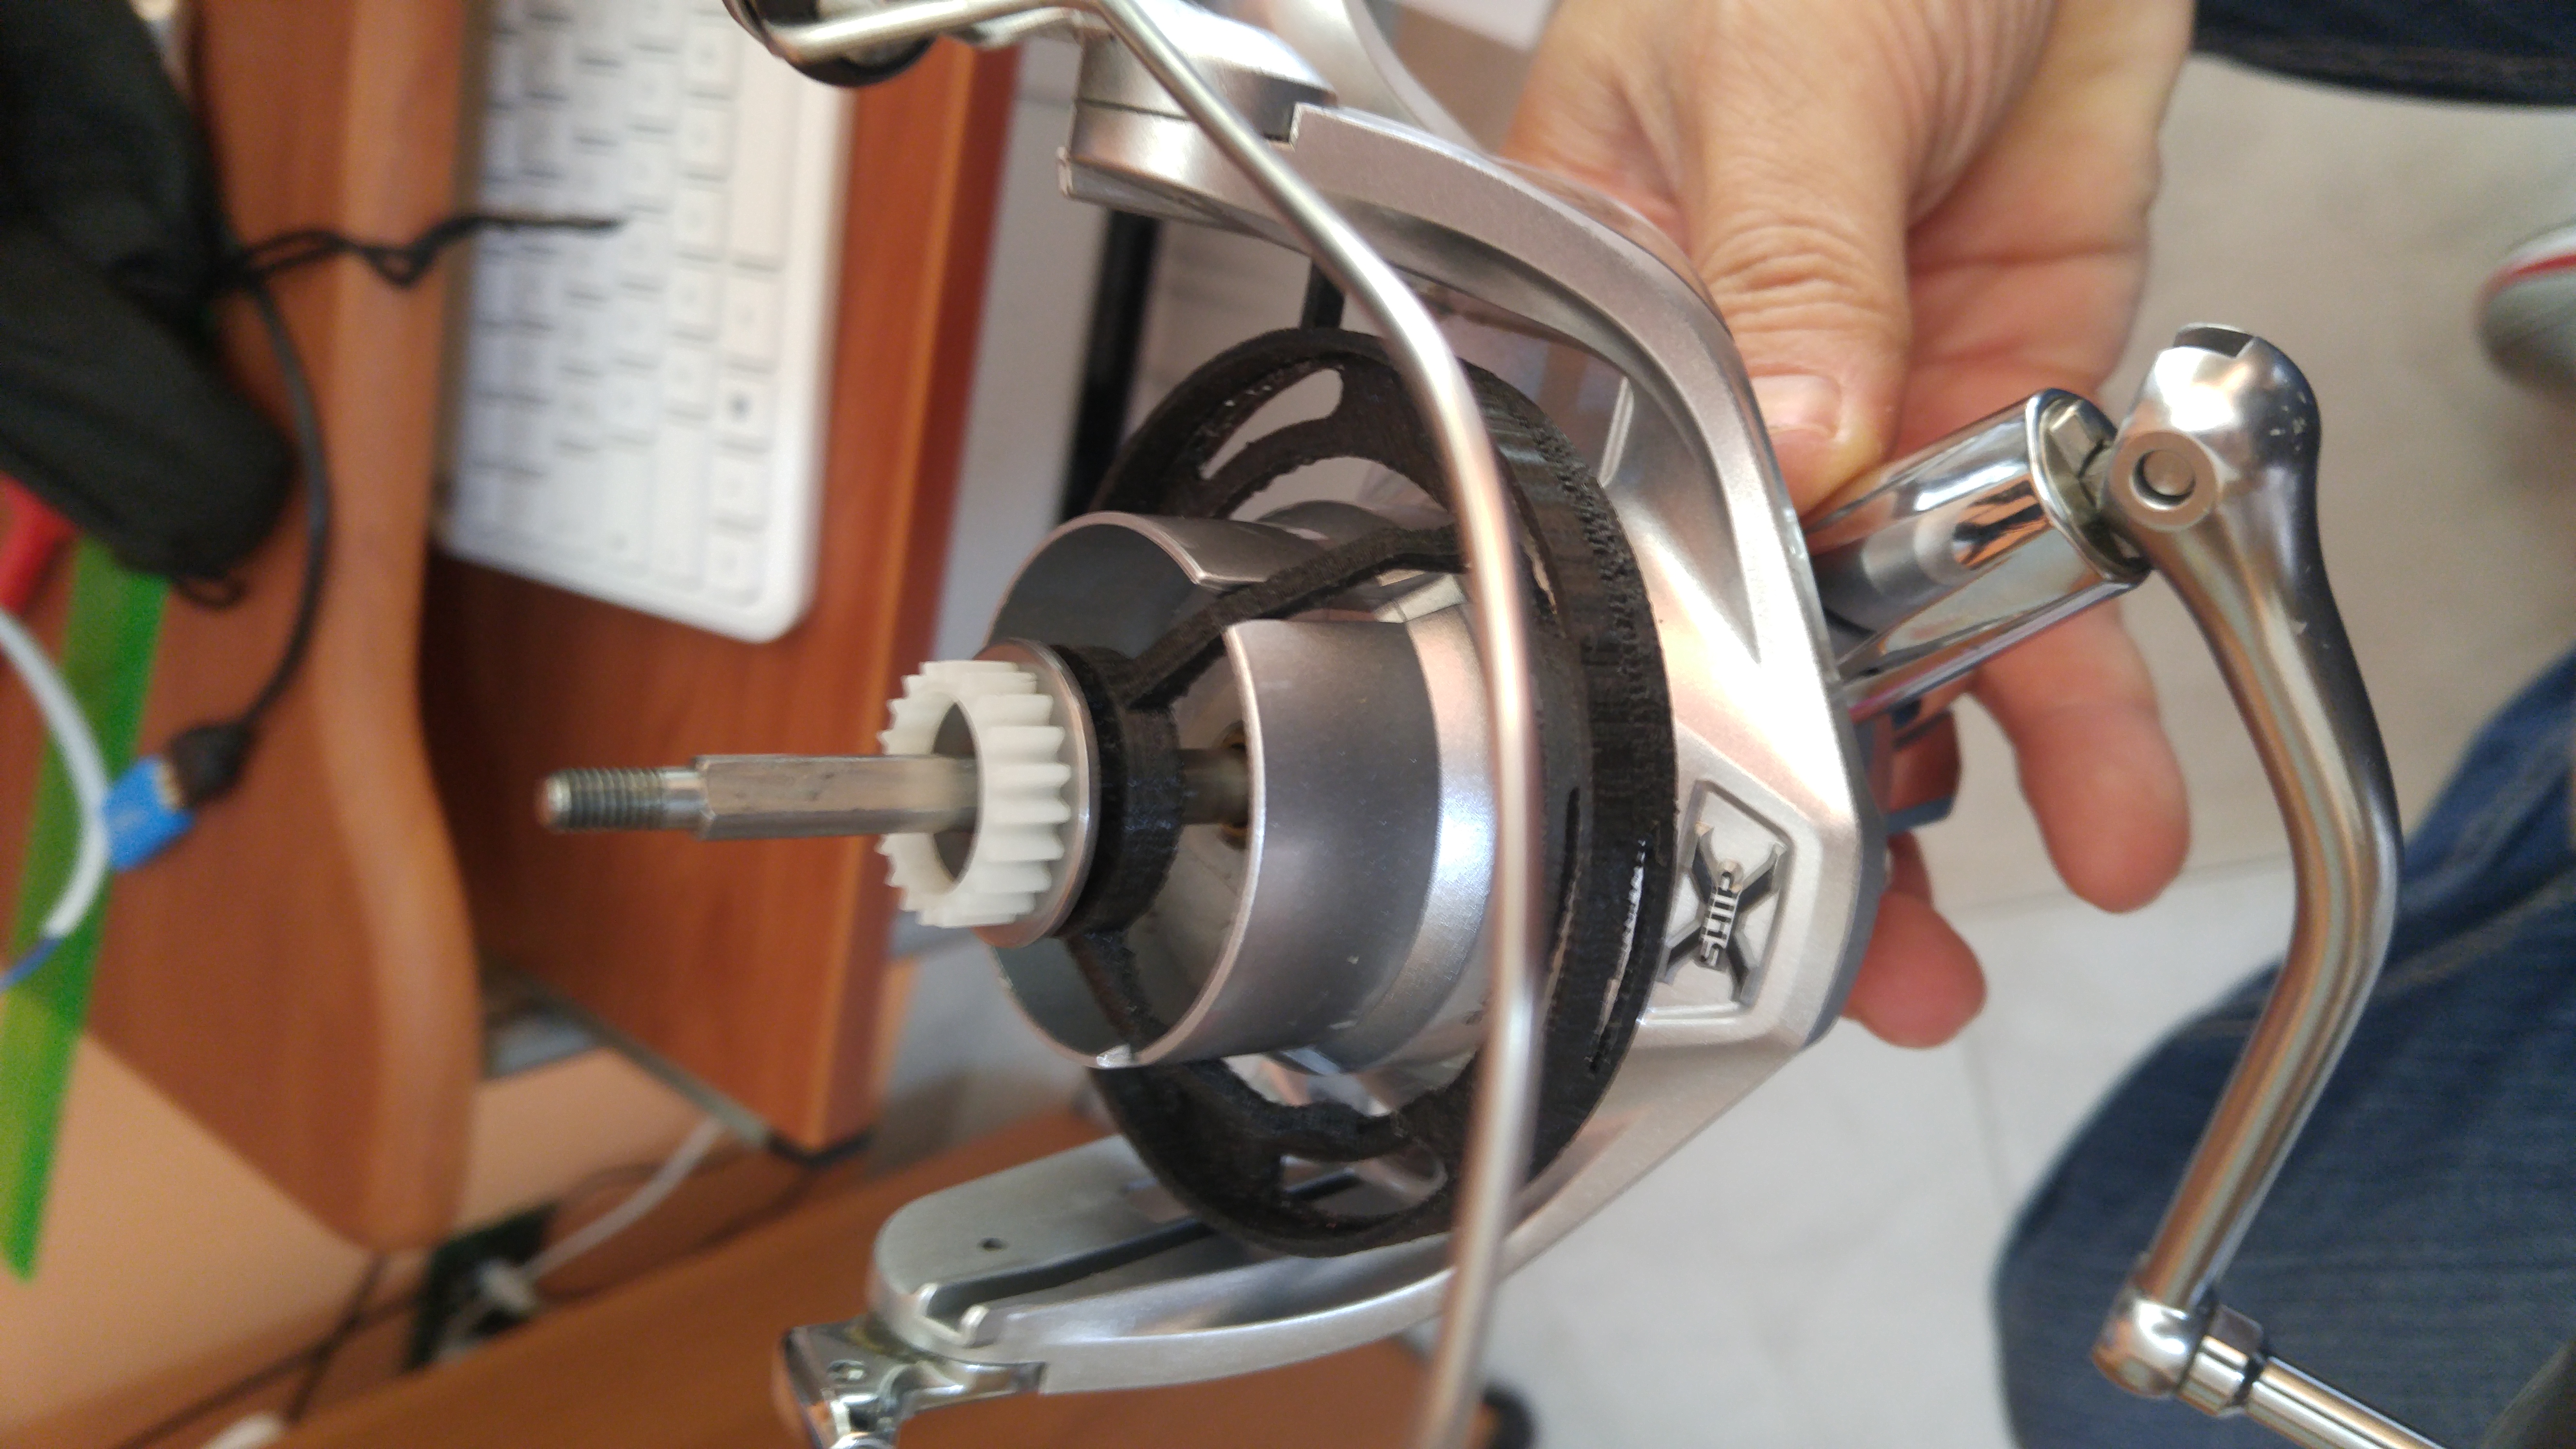 Support reel fishing rod model Shimano 6000